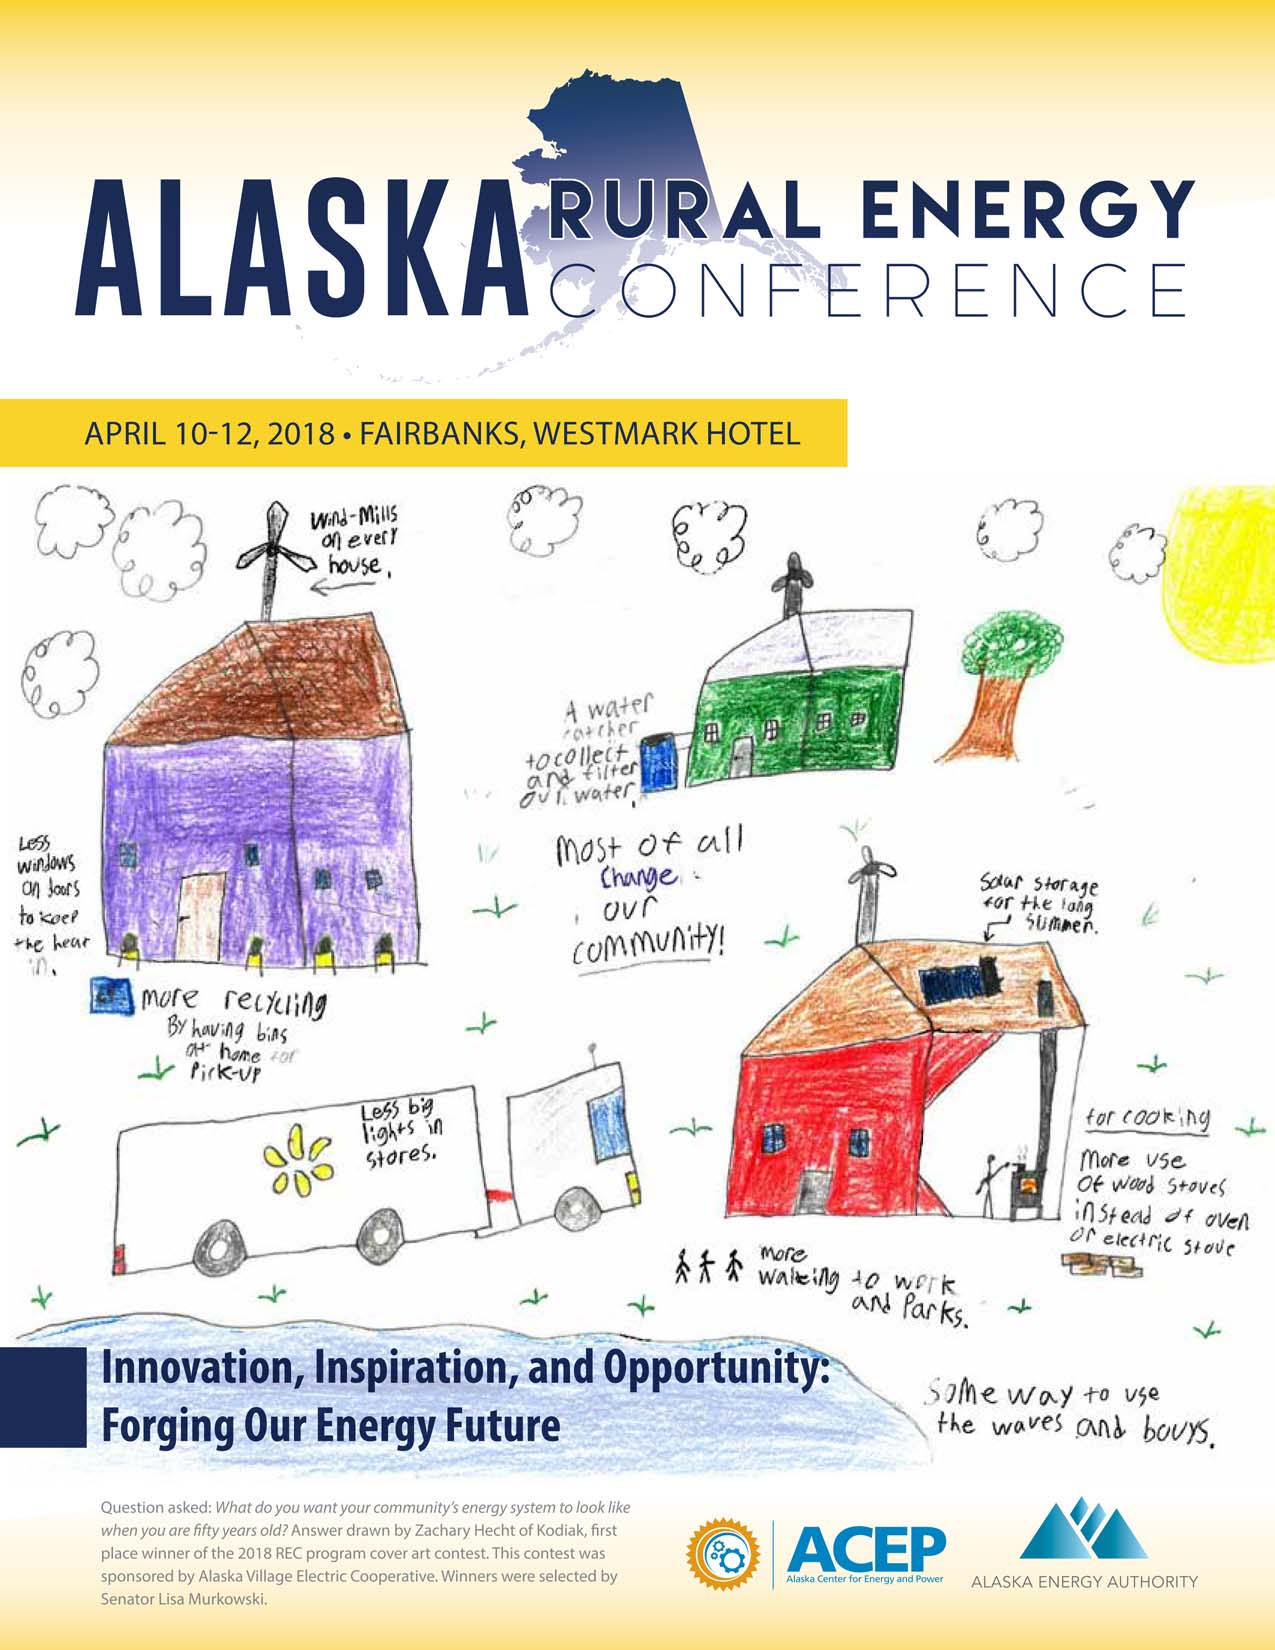 Alaska Rural Energy Conference Starts Tuesday